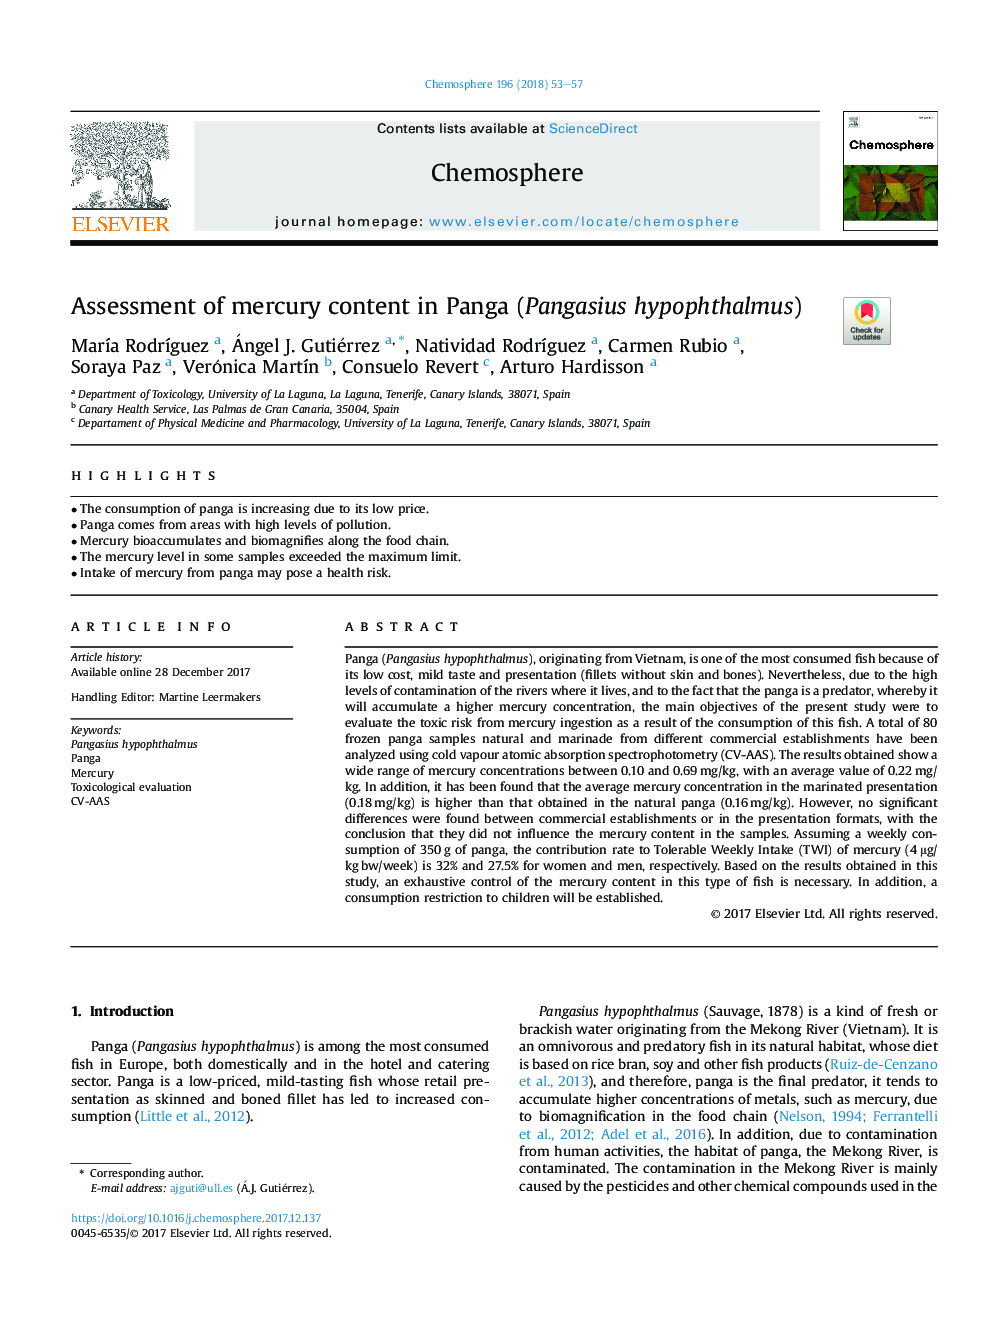 Assessment of mercury content in Panga (Pangasius hypophthalmus)